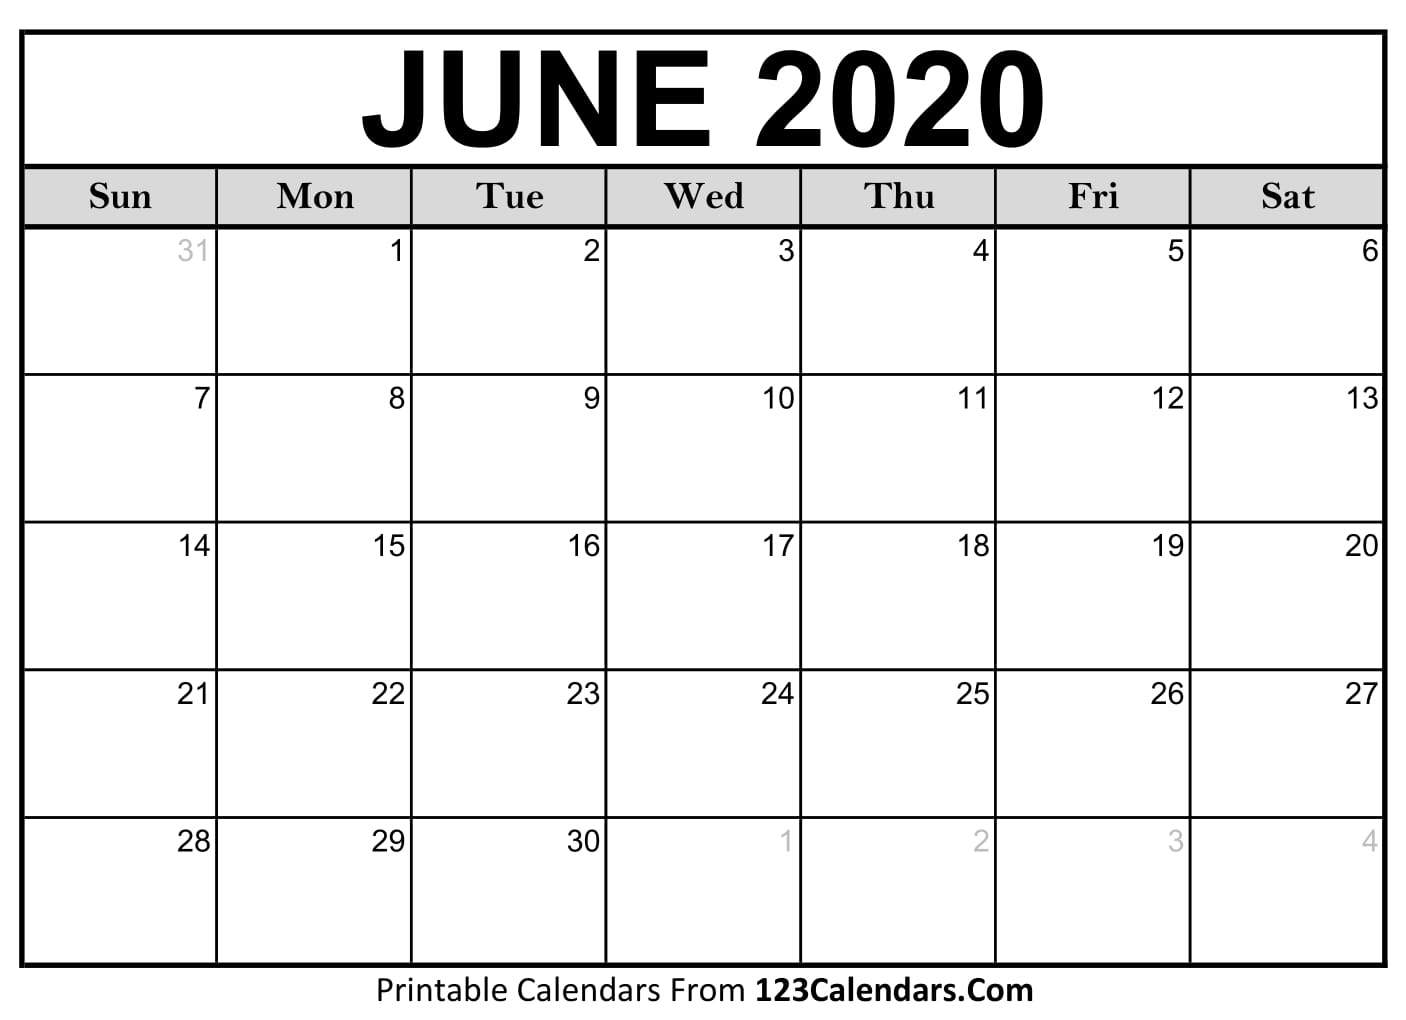 June 2020 Printable Calendar | 123Calendars